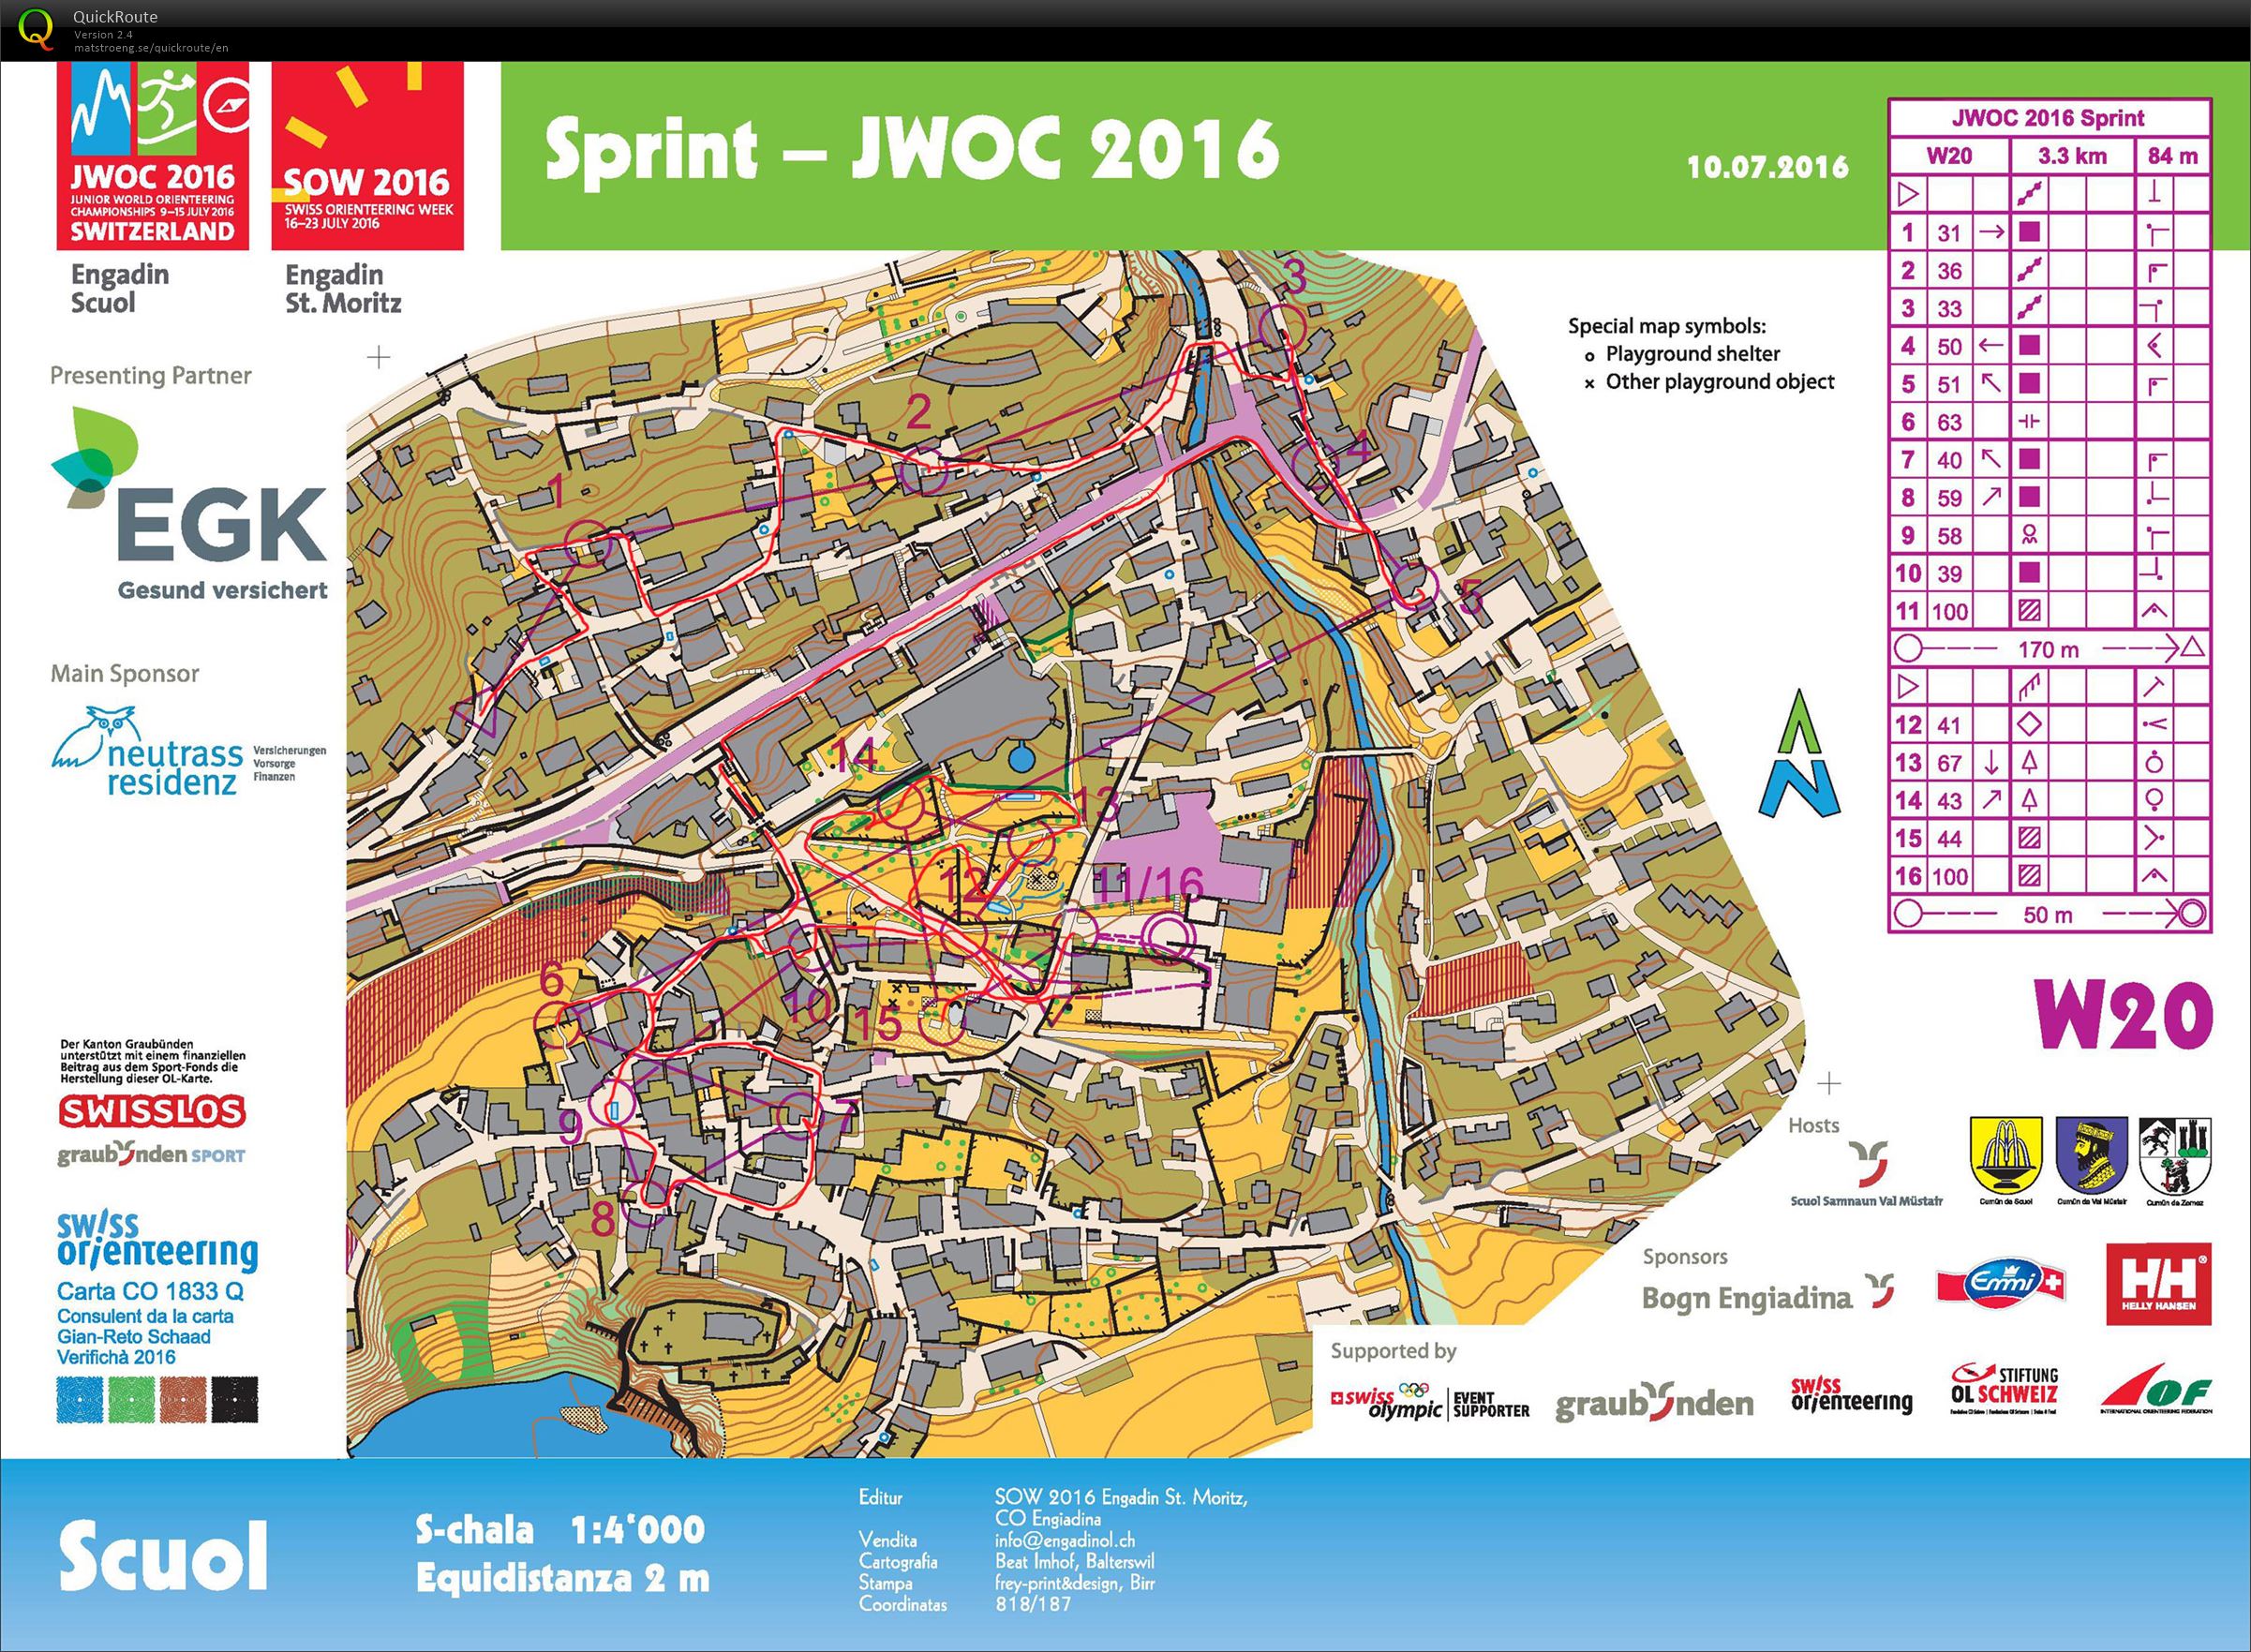 JWOC 2016 Sprint (10-07-2016)